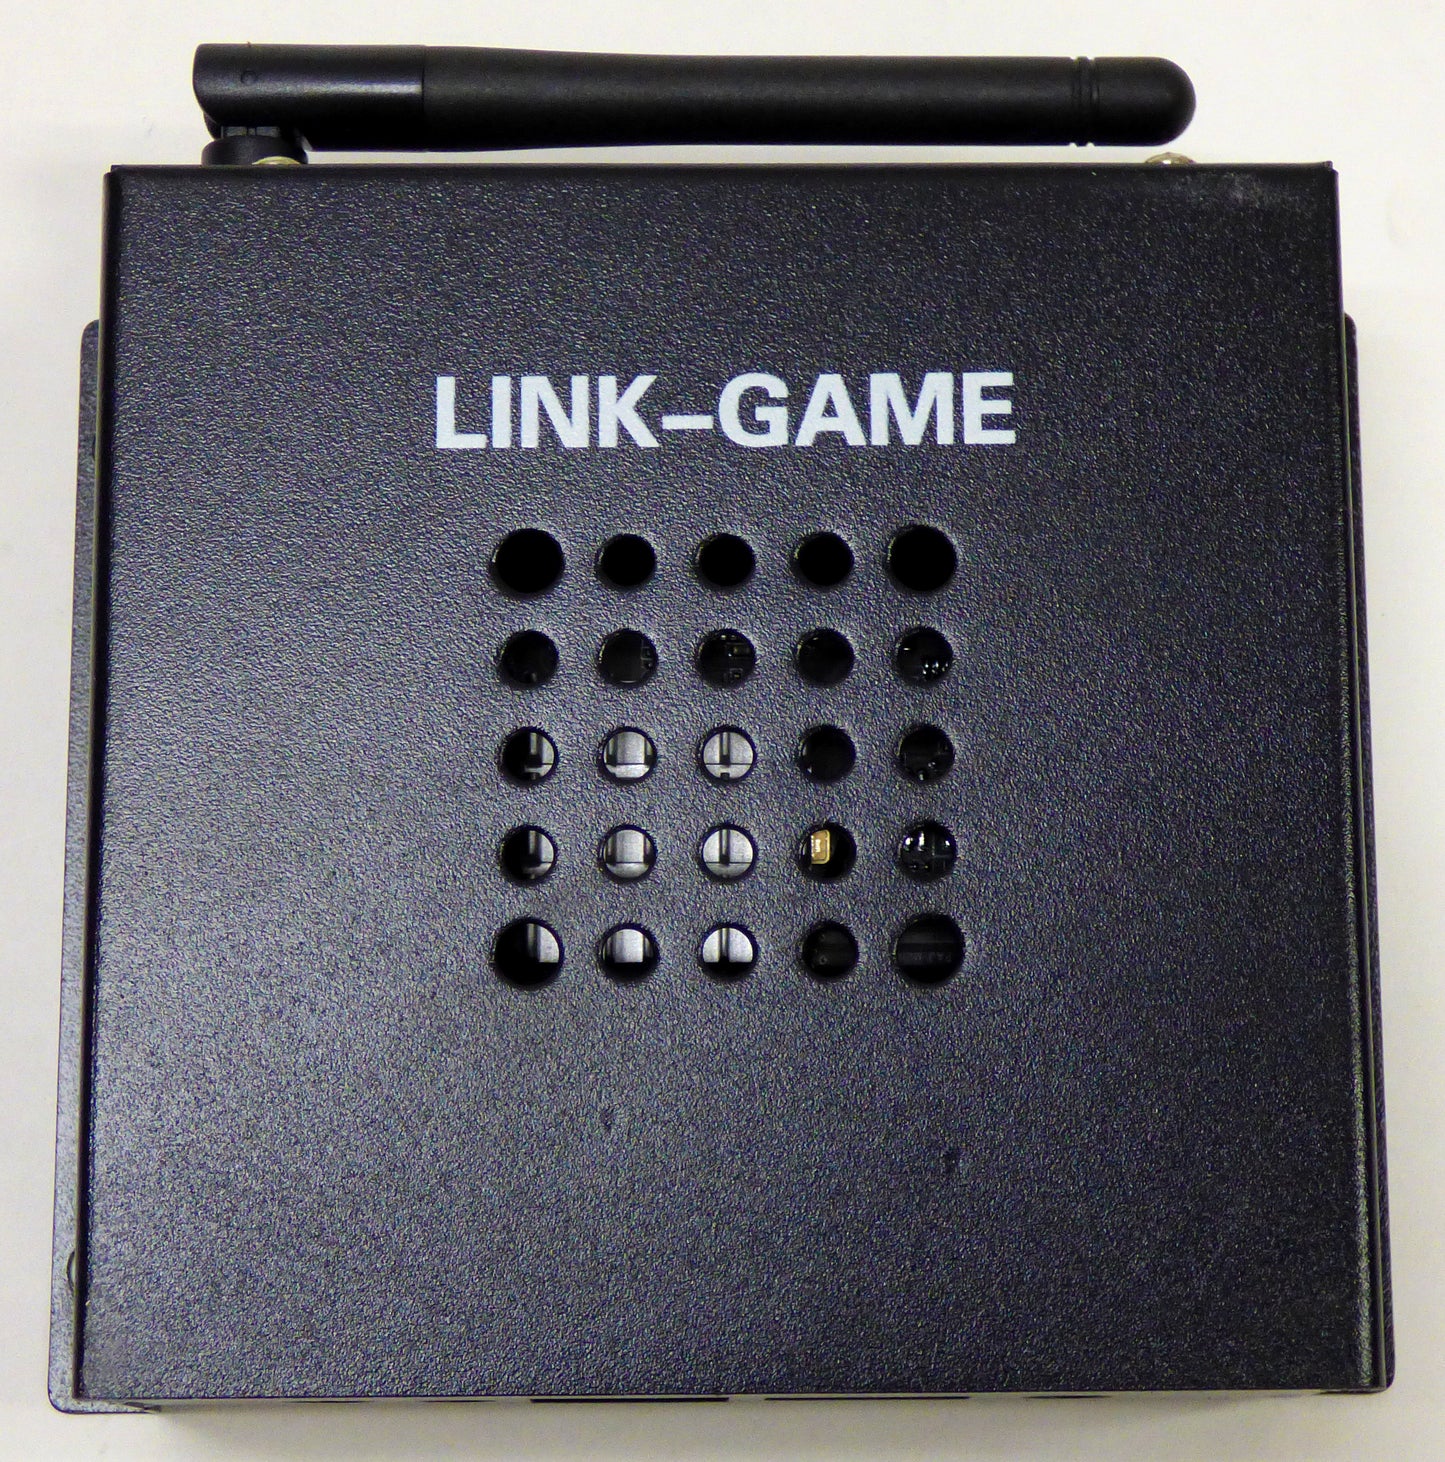 link-game video game box de-b1-1.0 top view